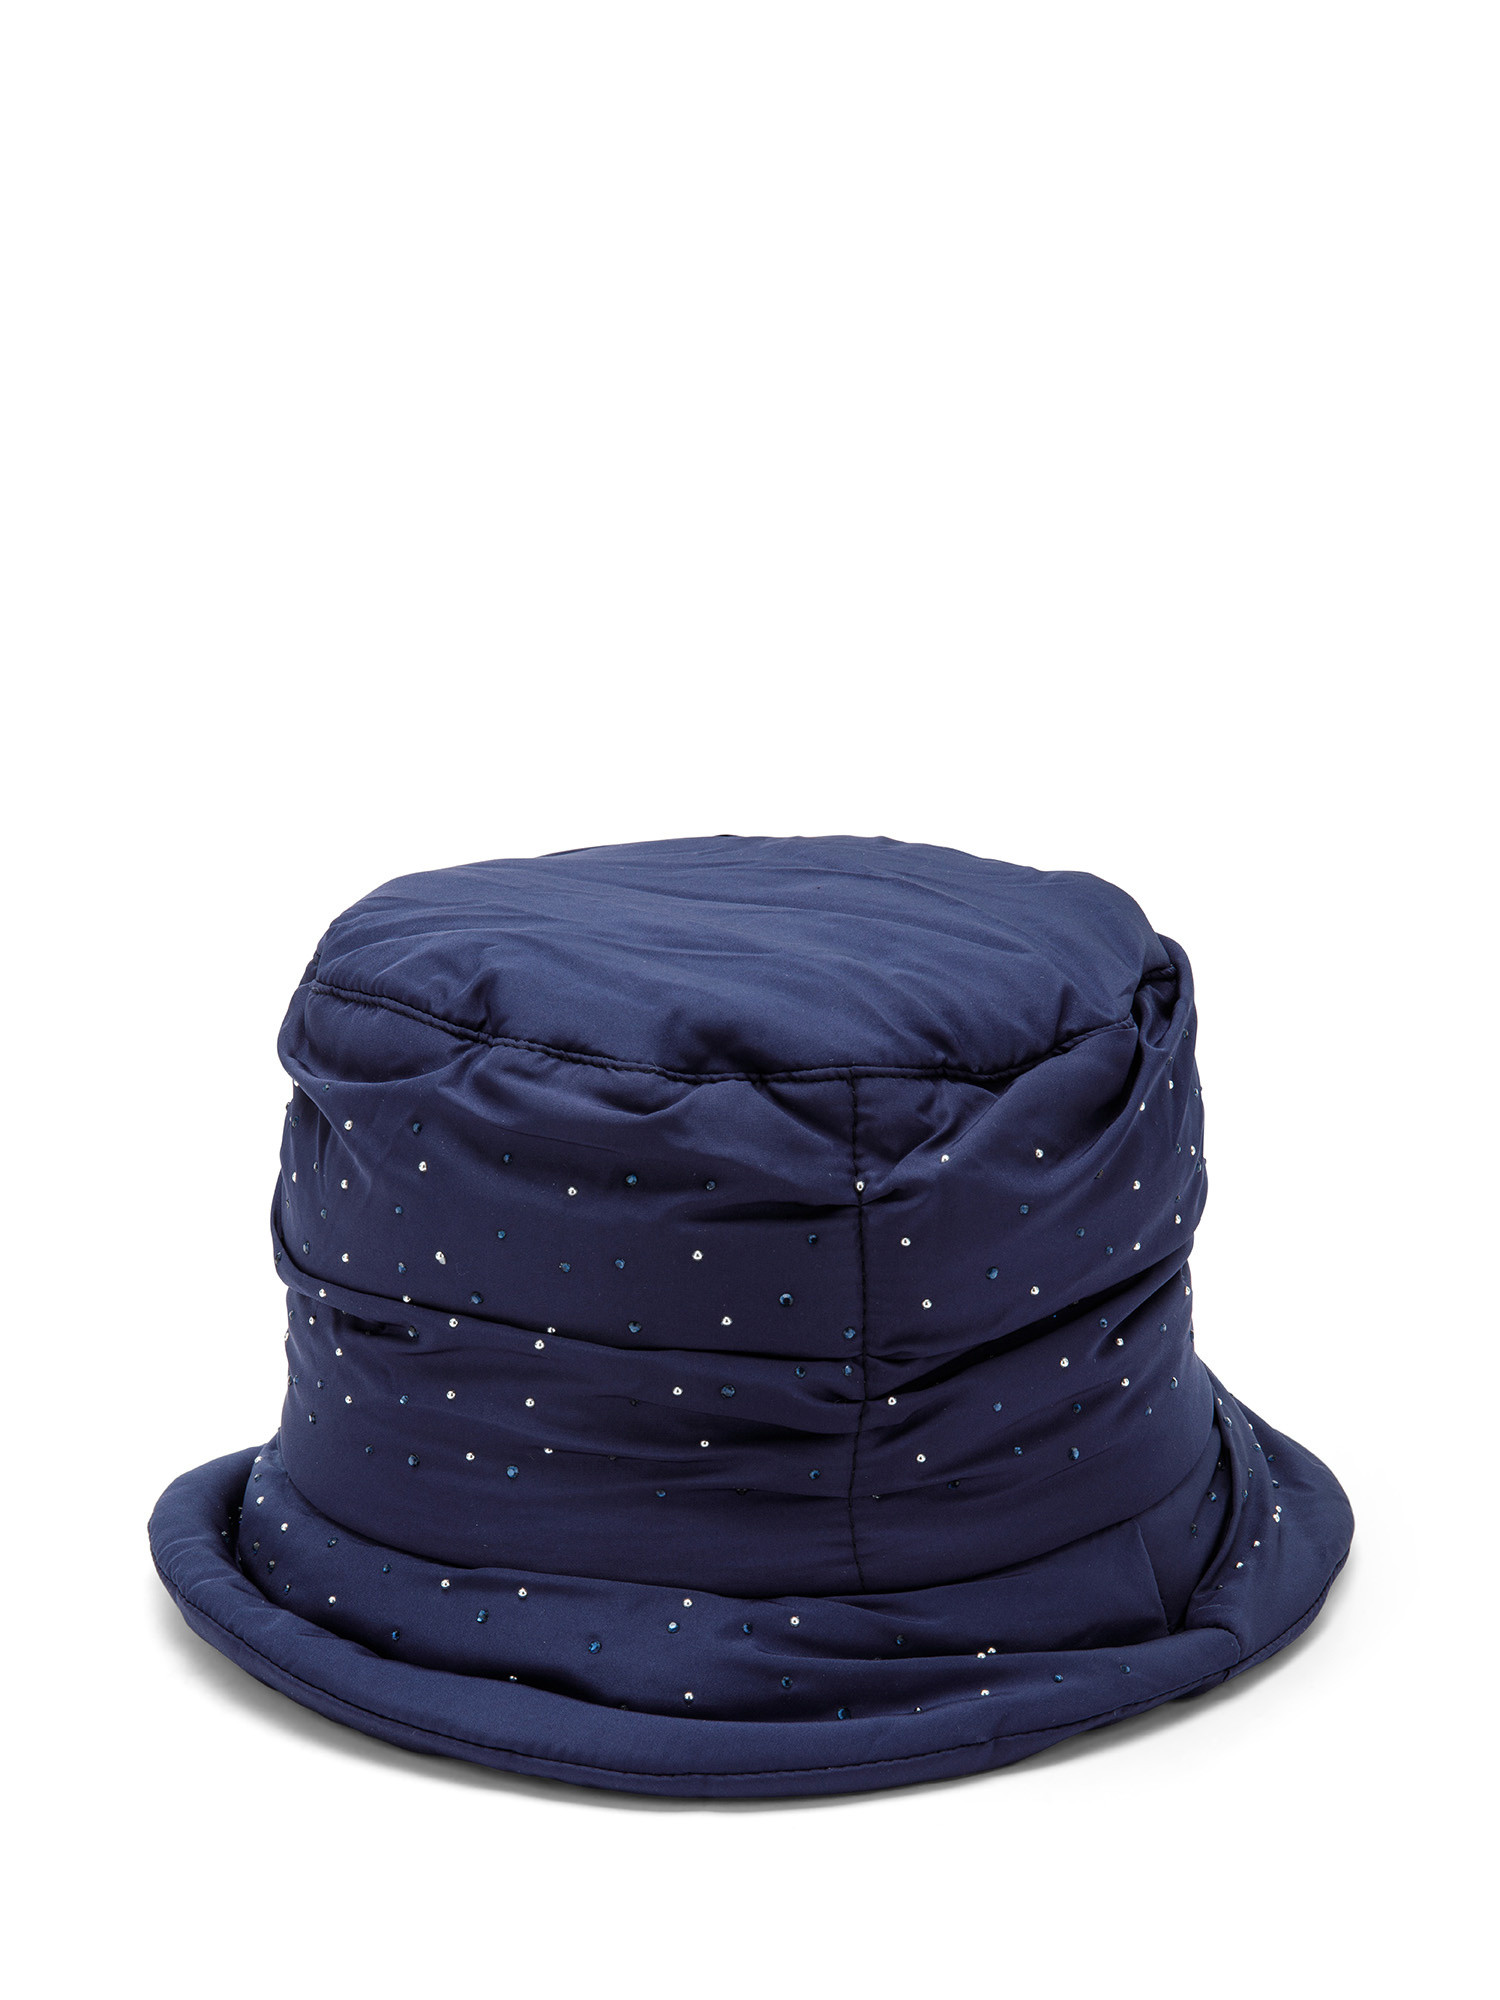 Koan - Hat with rhinestones, Blue, large image number 0